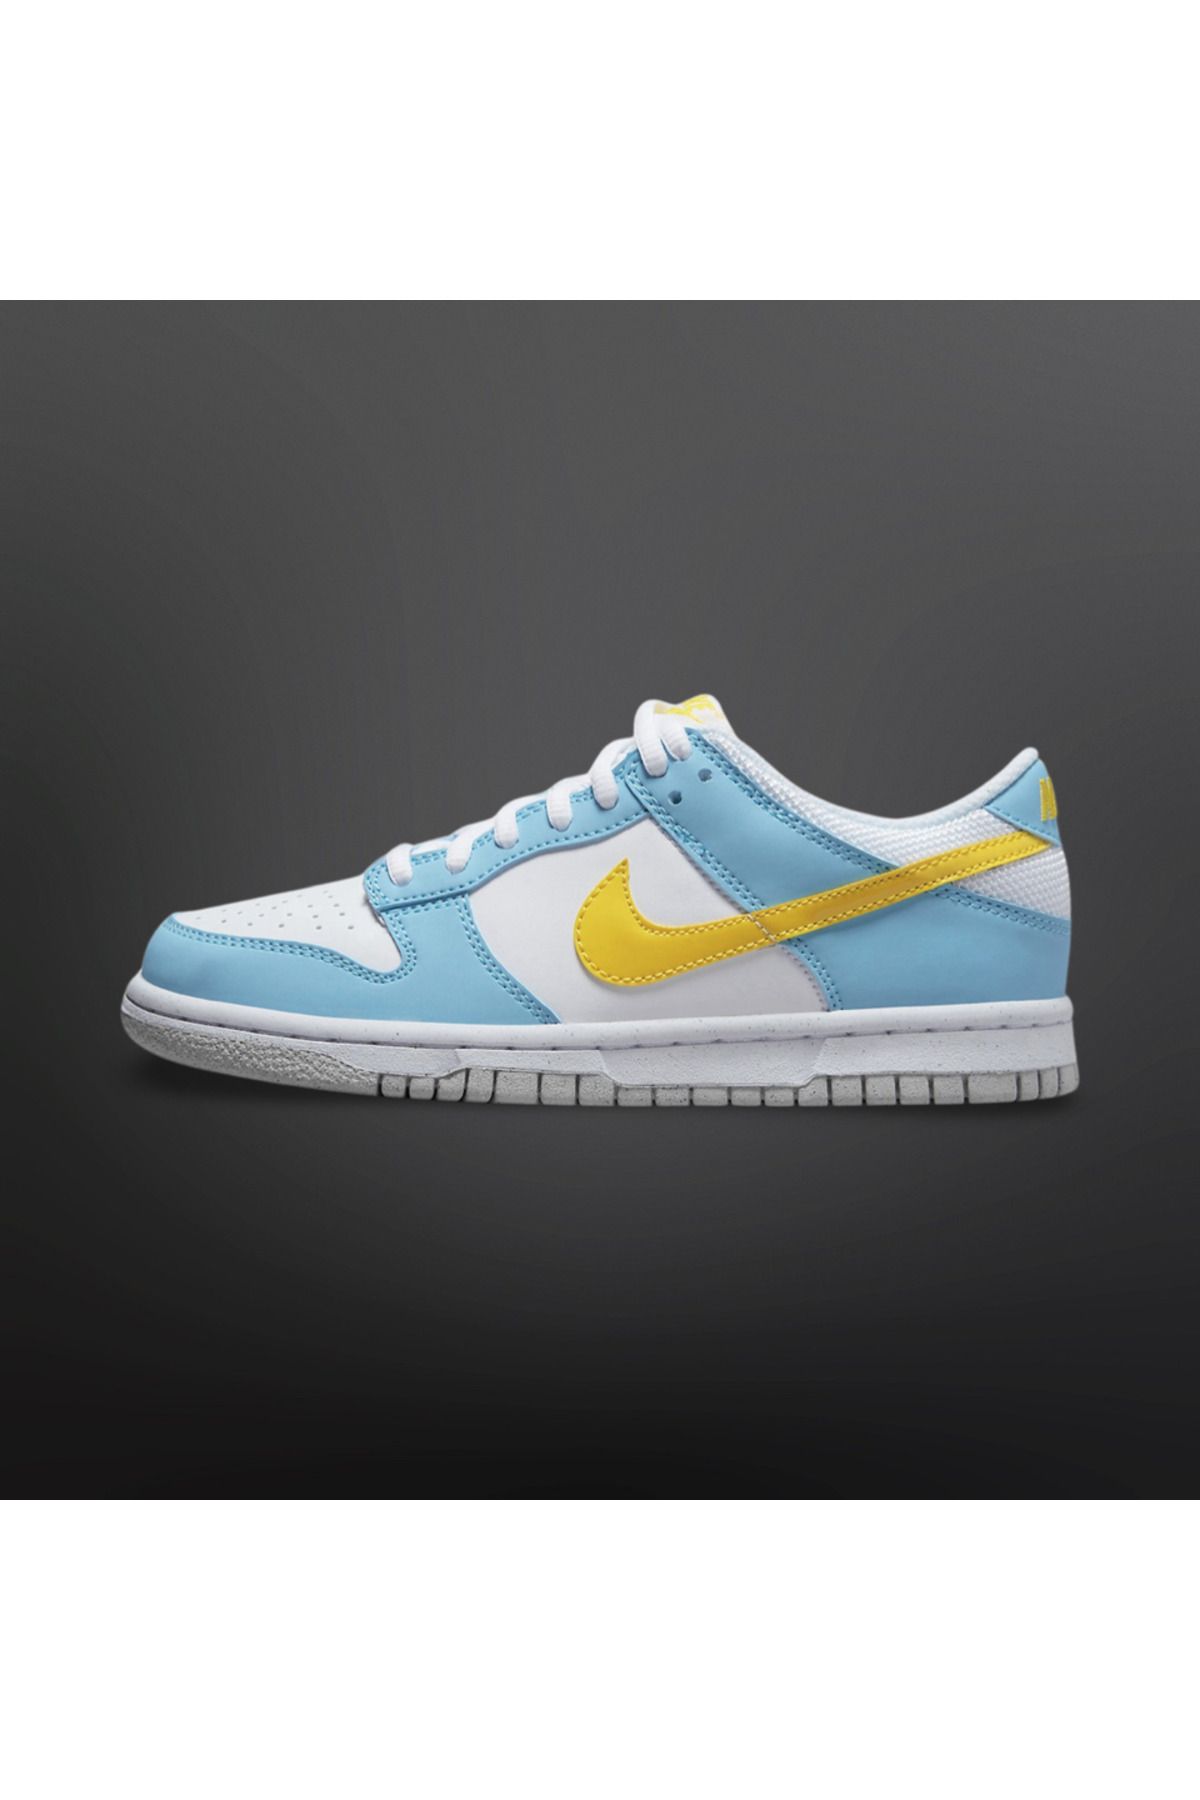 Nike Dunk Low GS Homer Simpson Blue Yellow White Sneaker